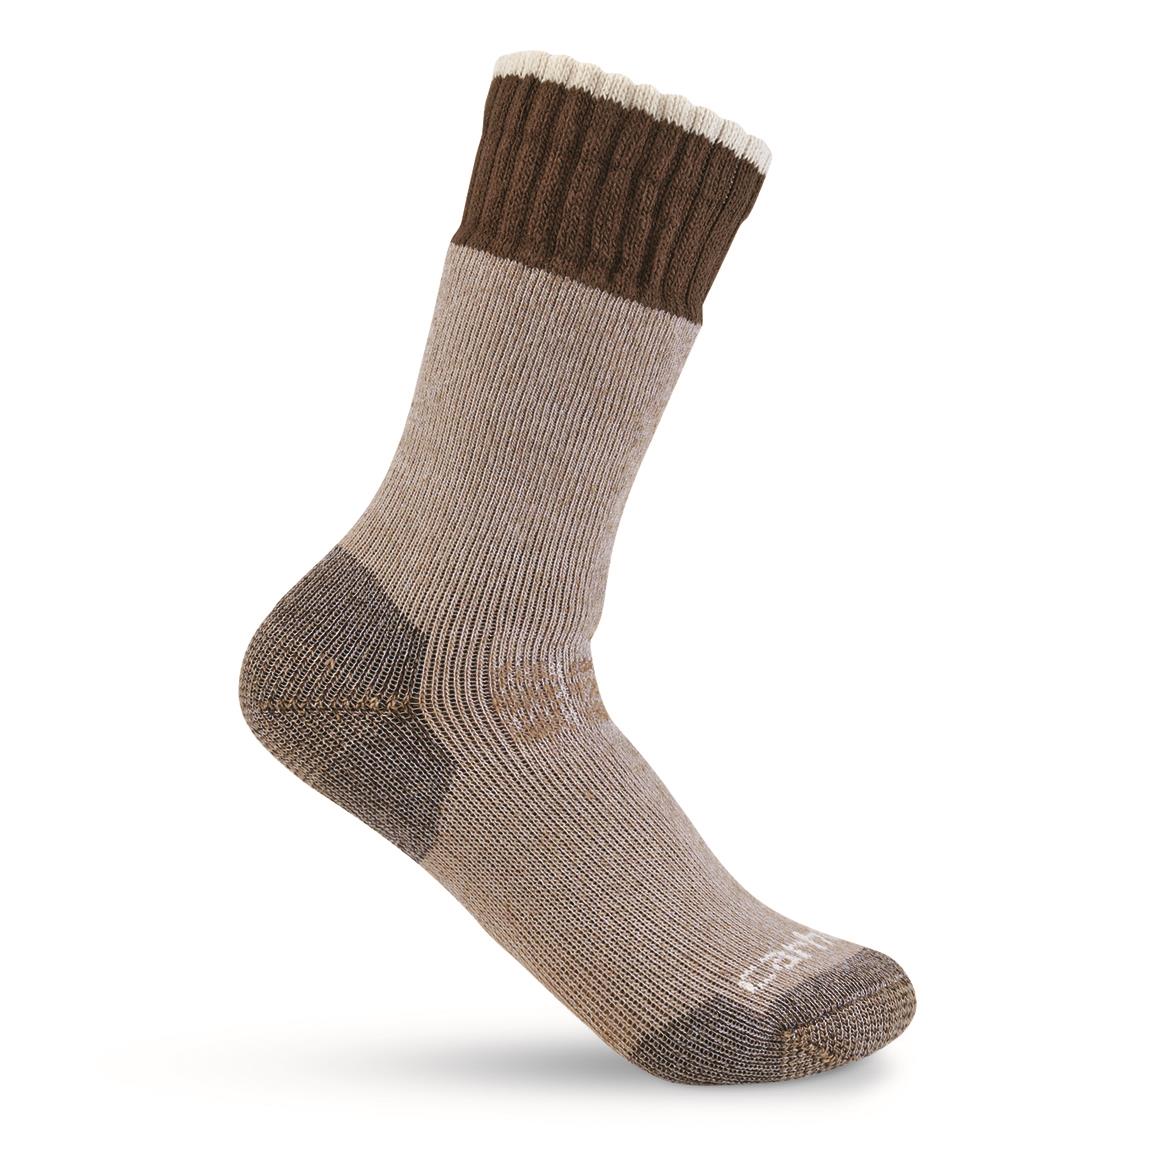 Carhartt Women's Heavyweight Synthetic-Wool Blend Boot Socks, Khaki